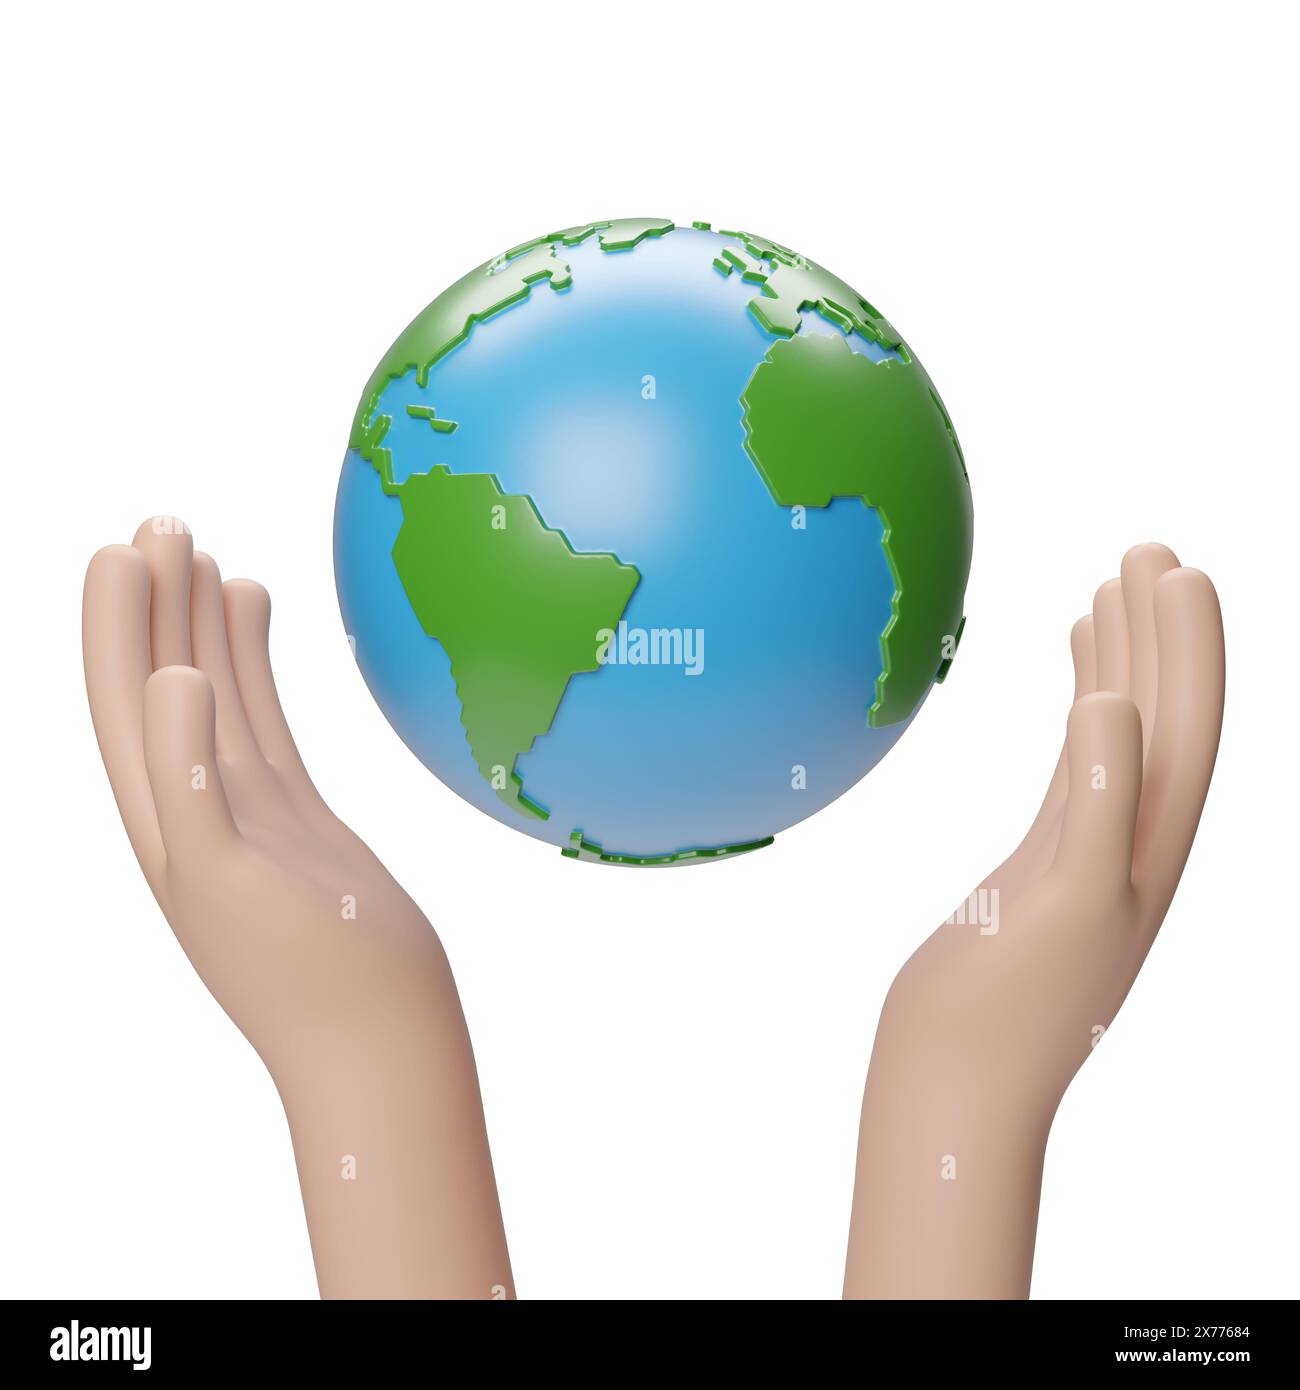 Cartoon-Hände heben den Planeten Erde an. 3D-Abbildung. Stockfoto